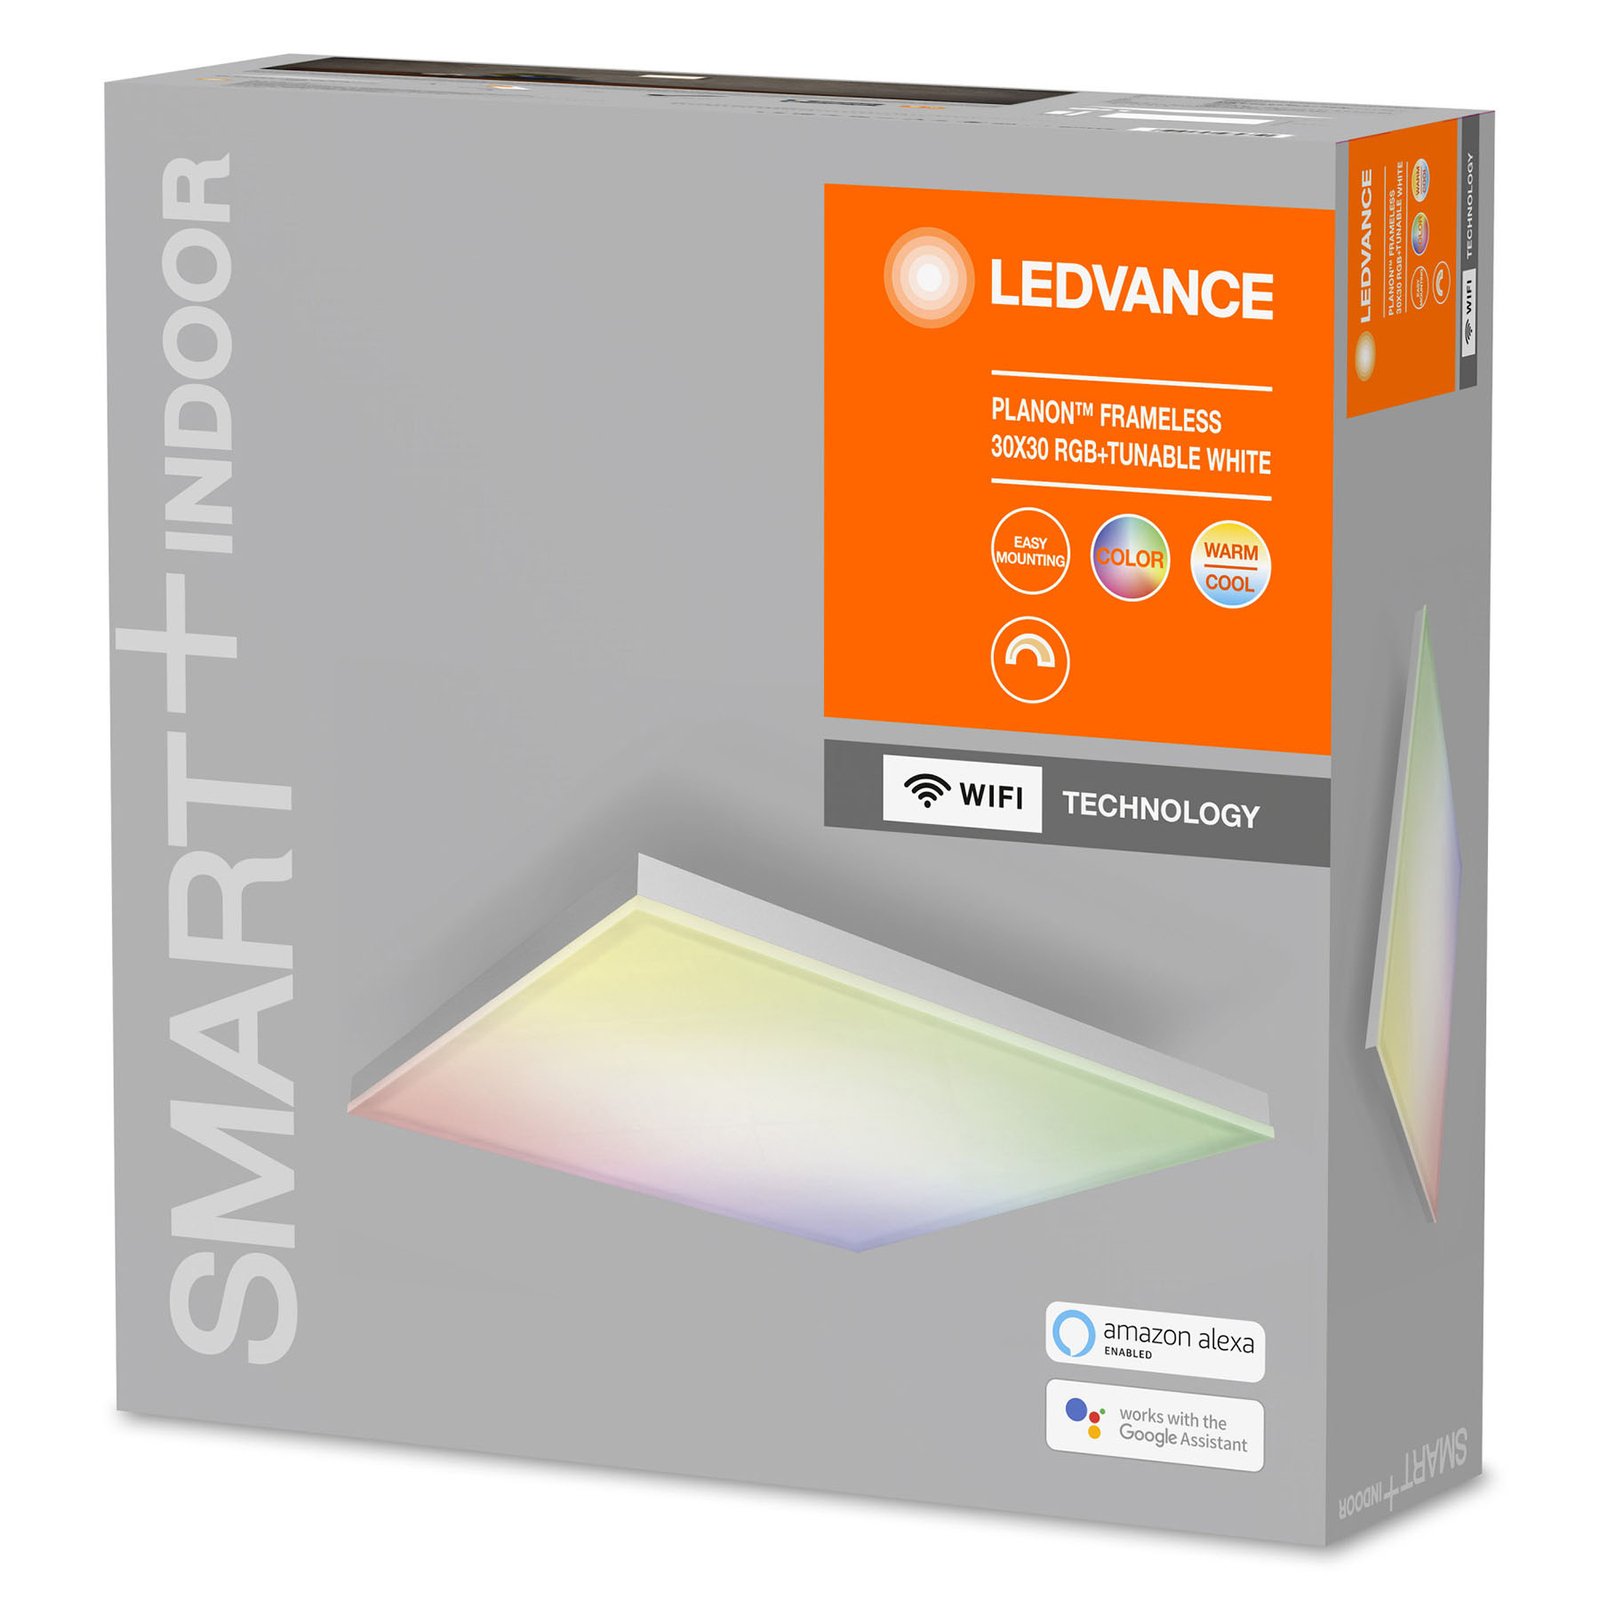 LEDVANCE SMART+ WiFi Planon LED panel RGBW 30x30cm